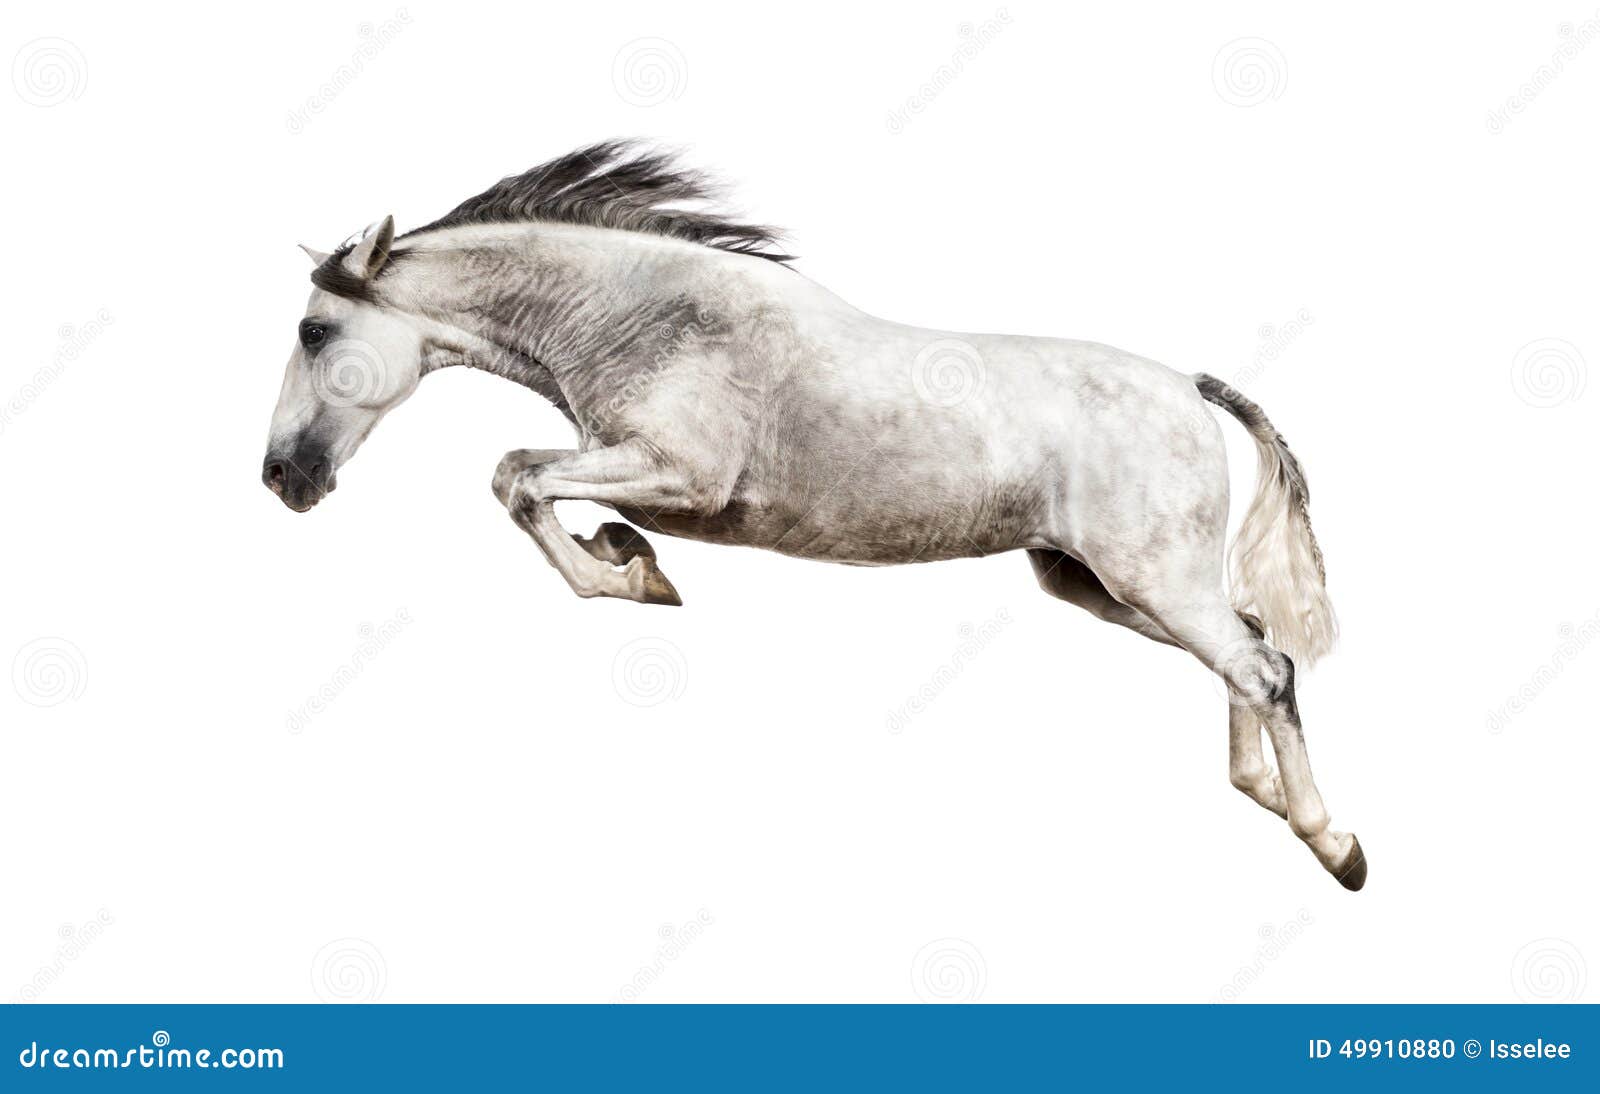 andalusian horse jumping